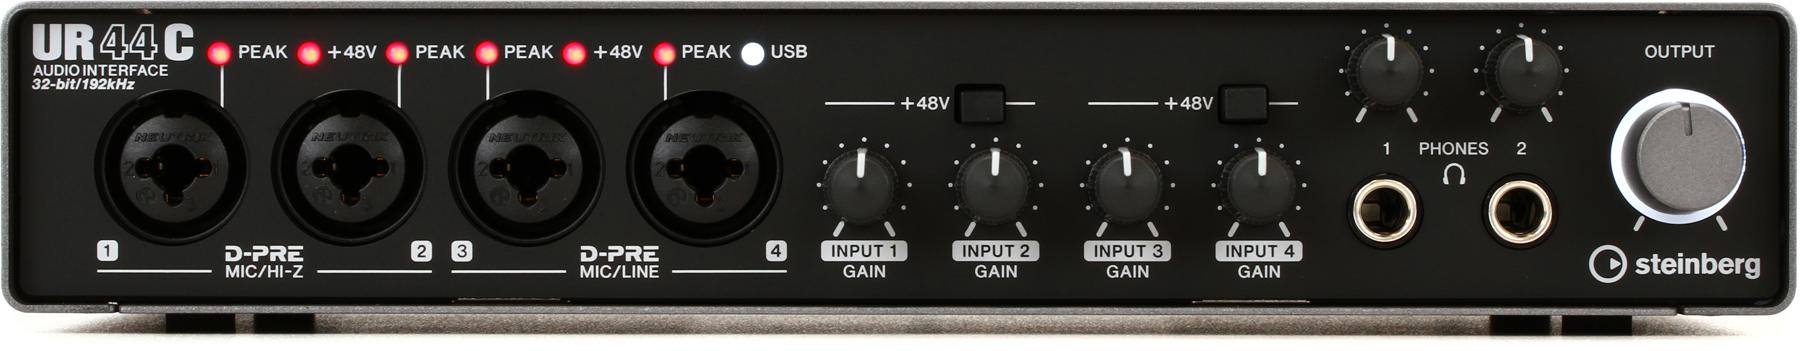 Steinberg UR44C USB Audio Interface-image